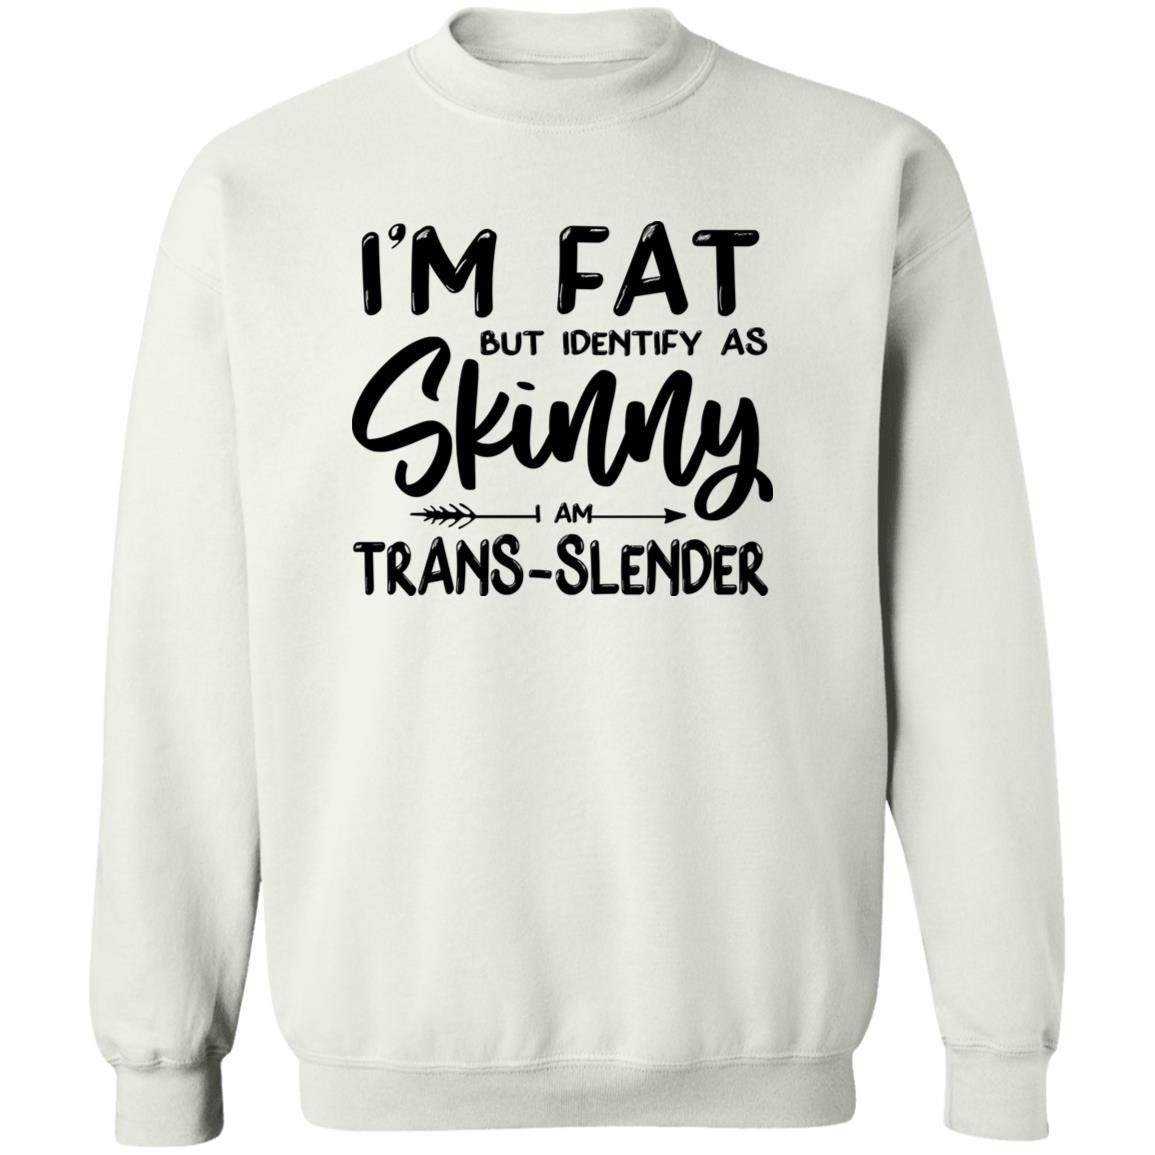 I’m Fat But Identify As Skinny I Am Trans-Slender shirt